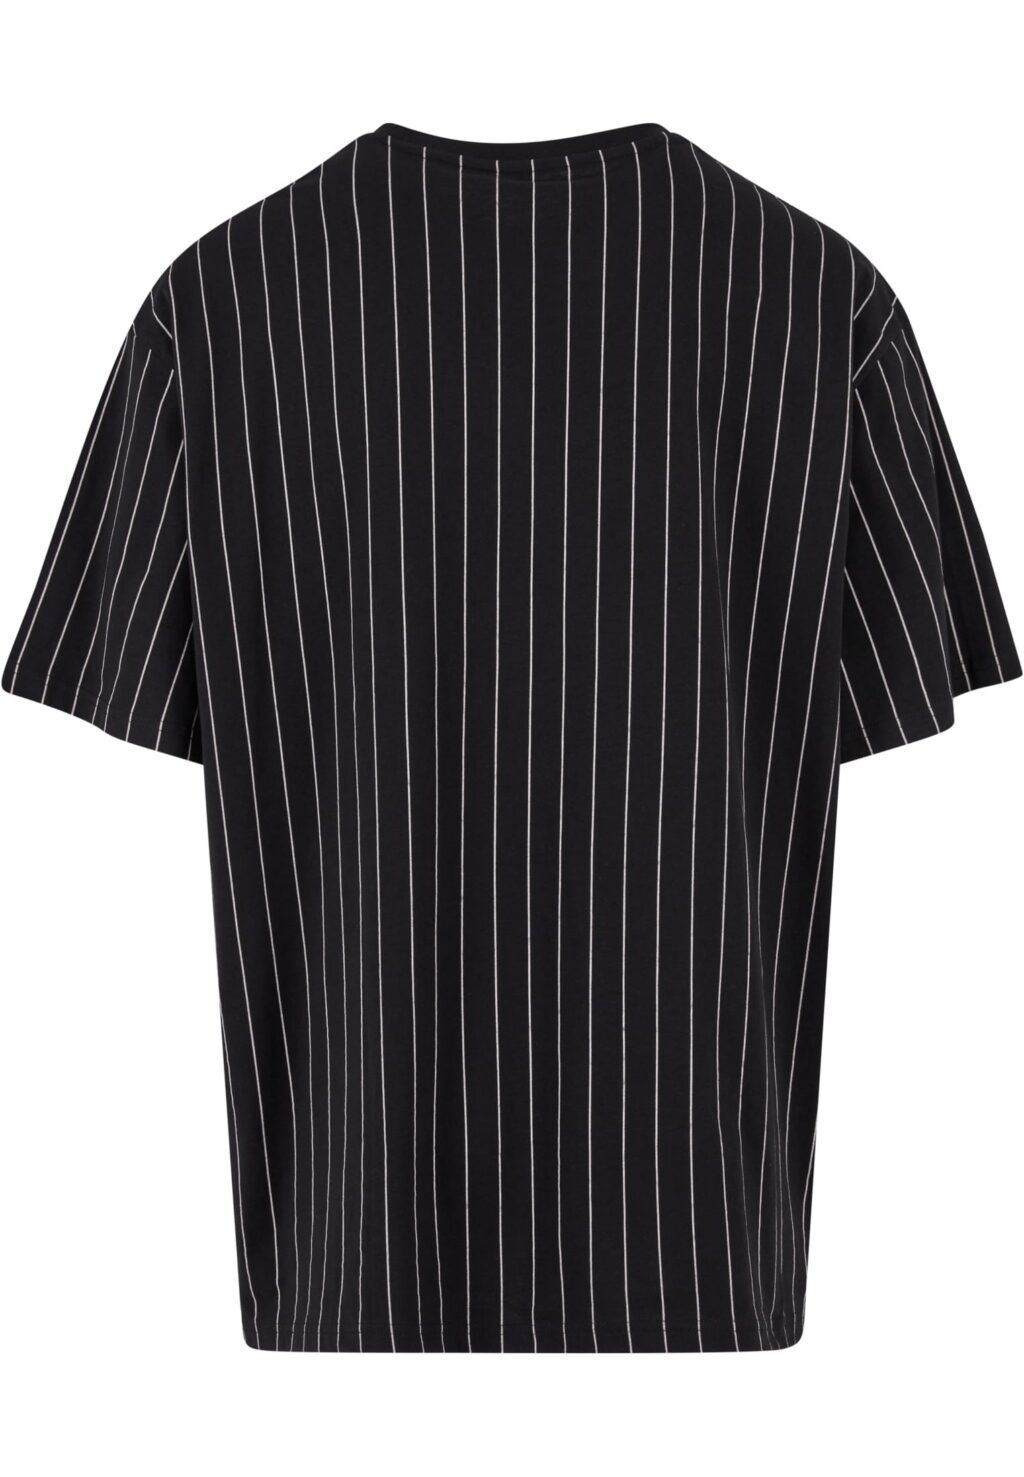 Rocawear Coles T-Shirt black RWTS064